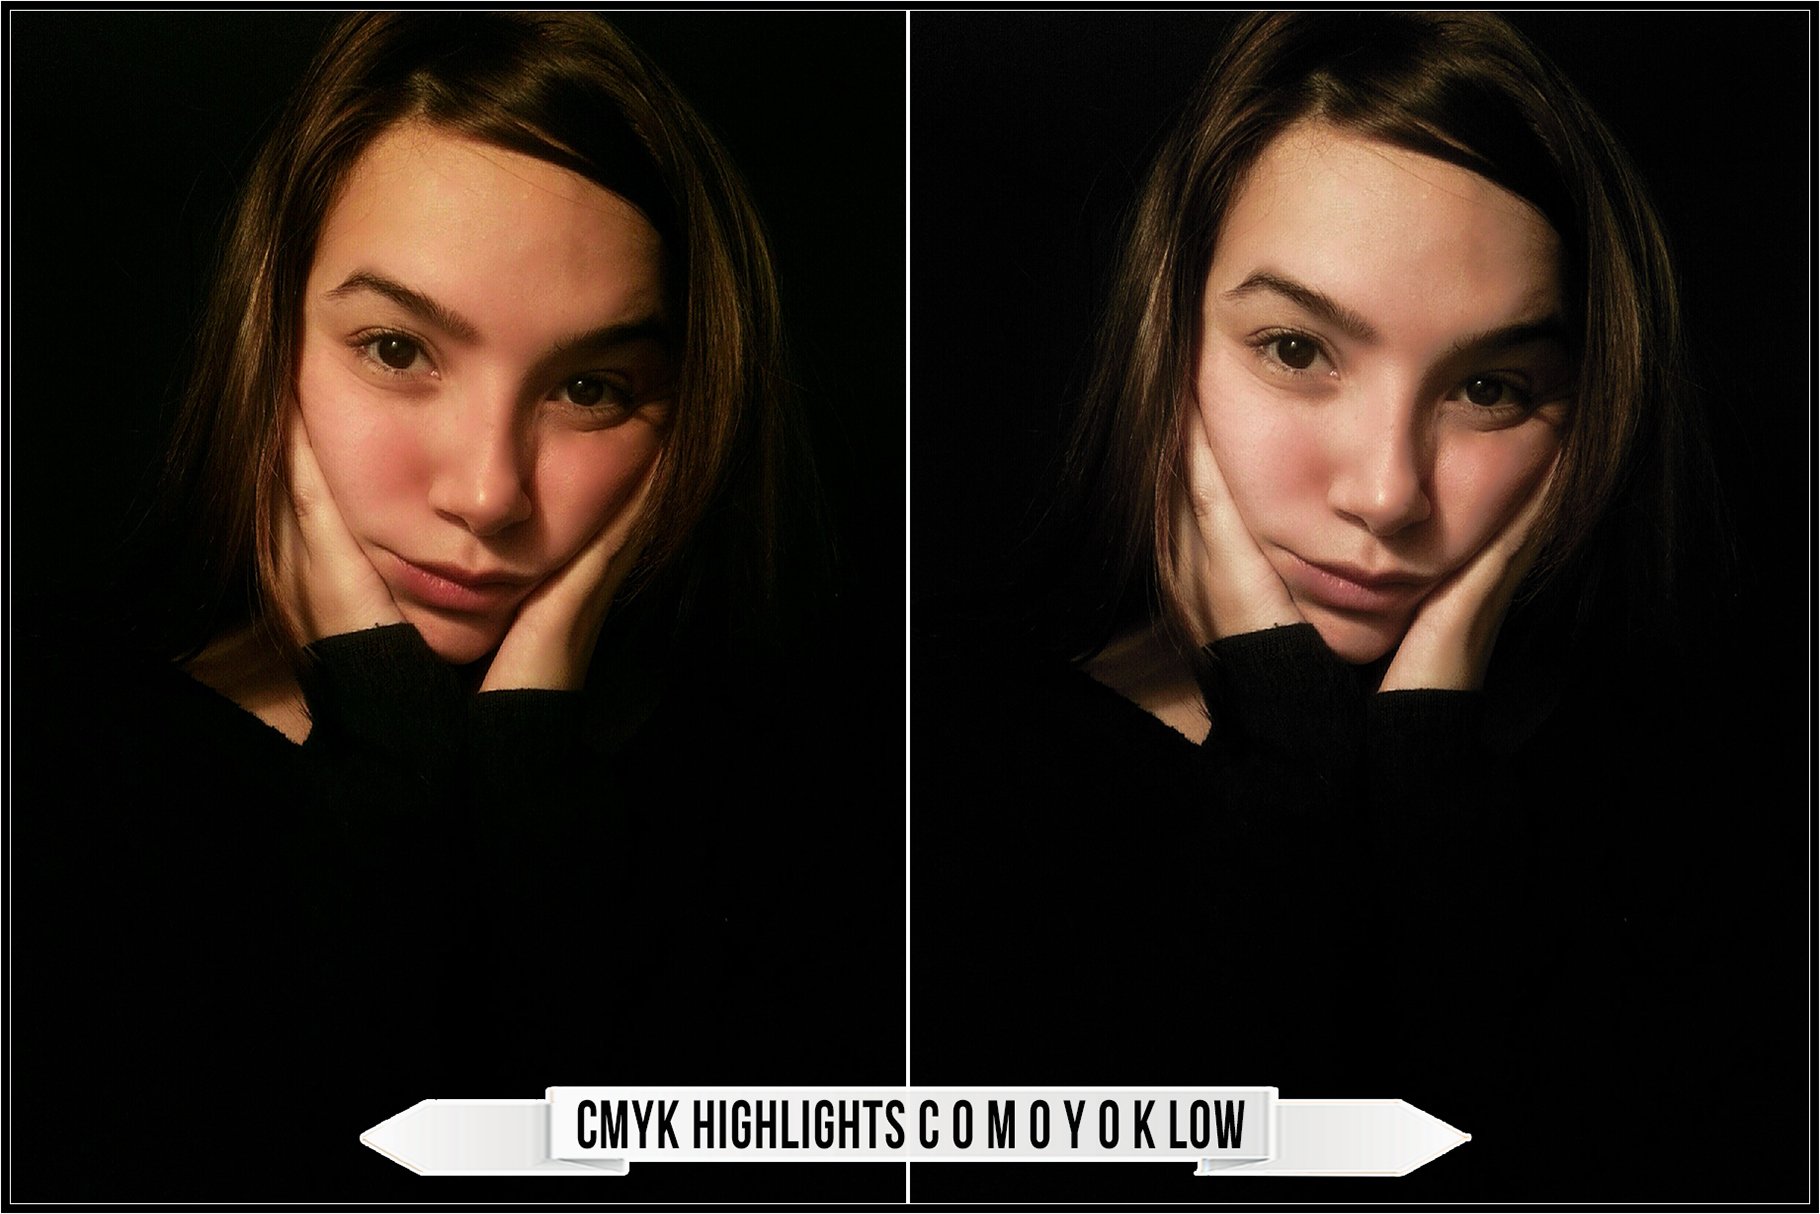 cmyk highlights c 0 m 0 y 0 k low 368